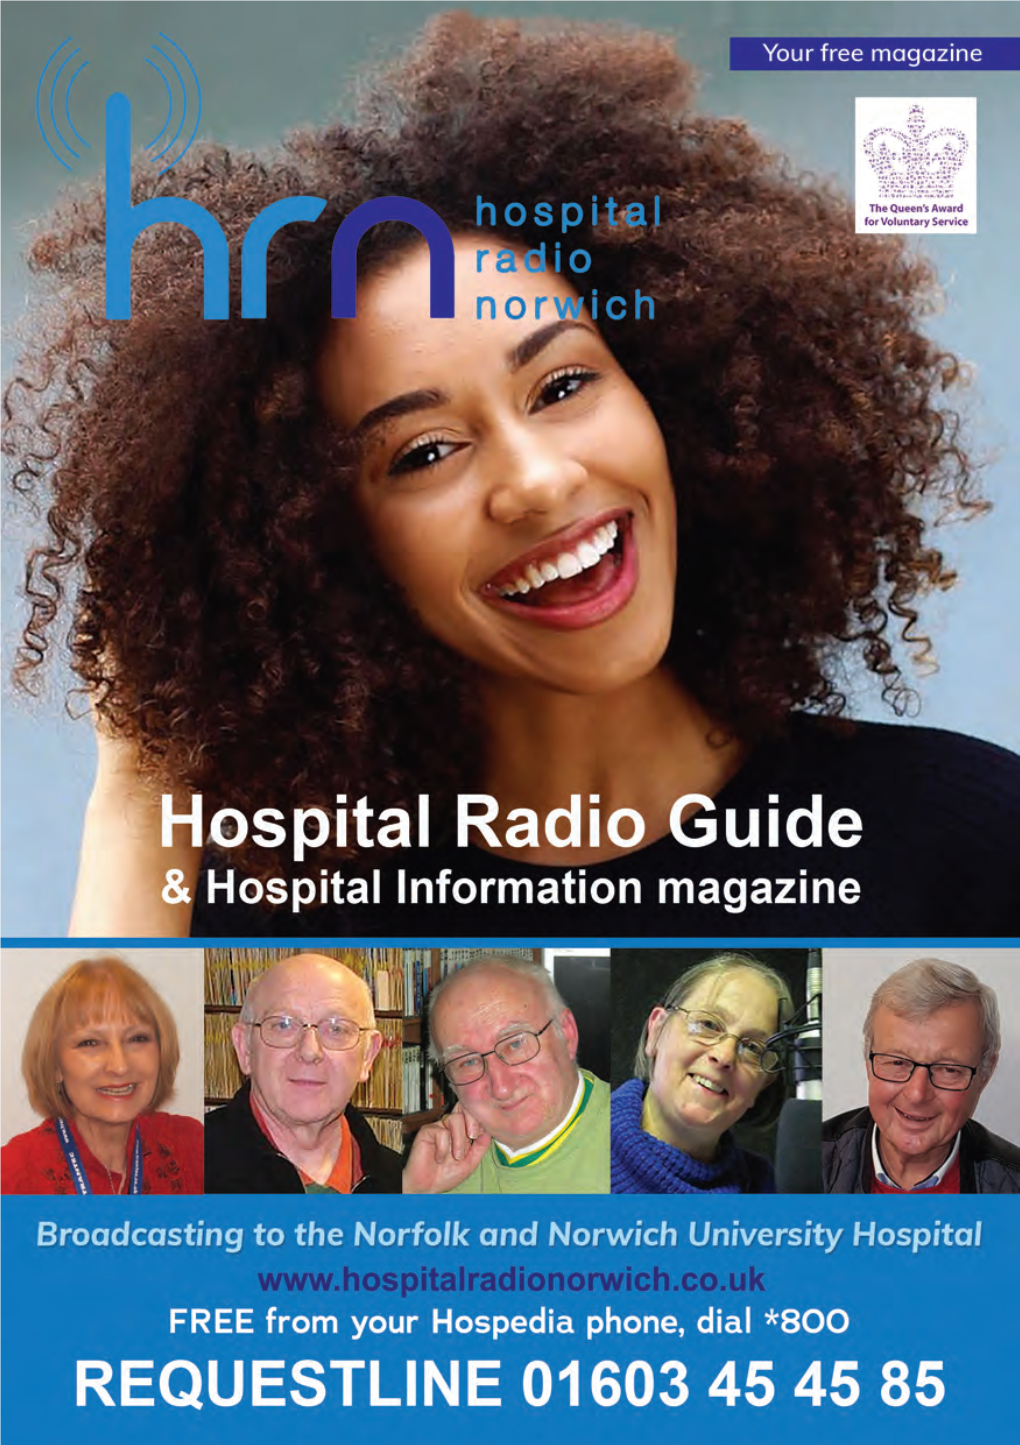 Why I Volunteer for Hospital Radio Norwich